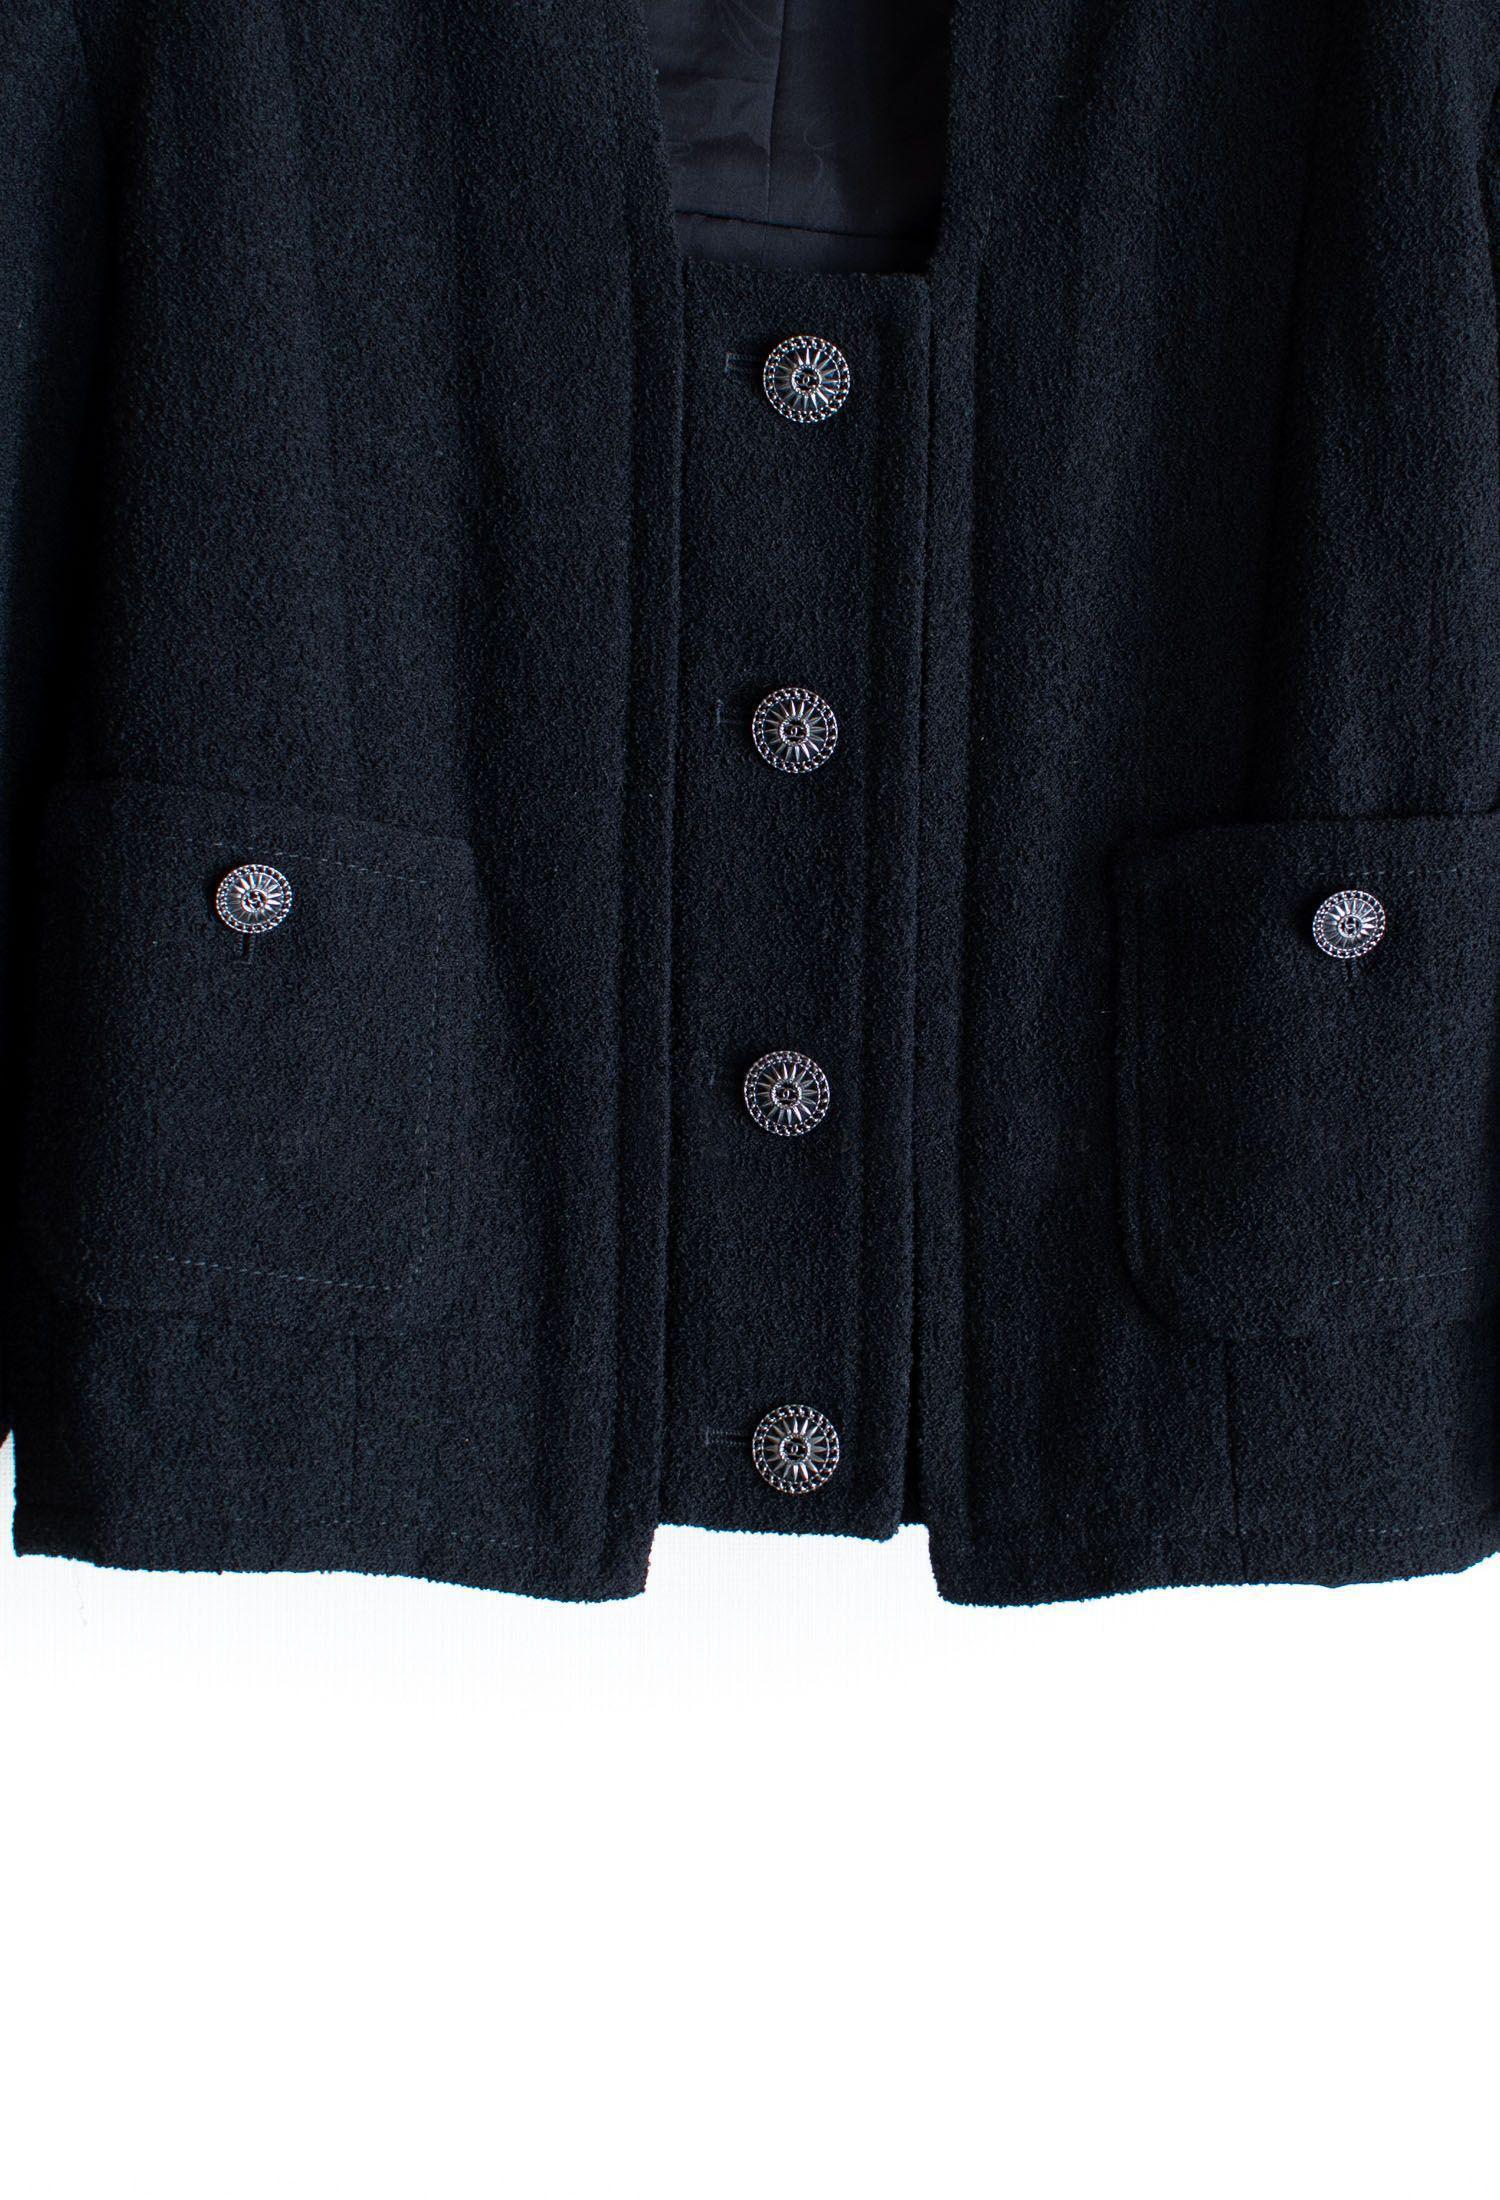 Chanel Paris/Singapore Black Tweed Jacket 1